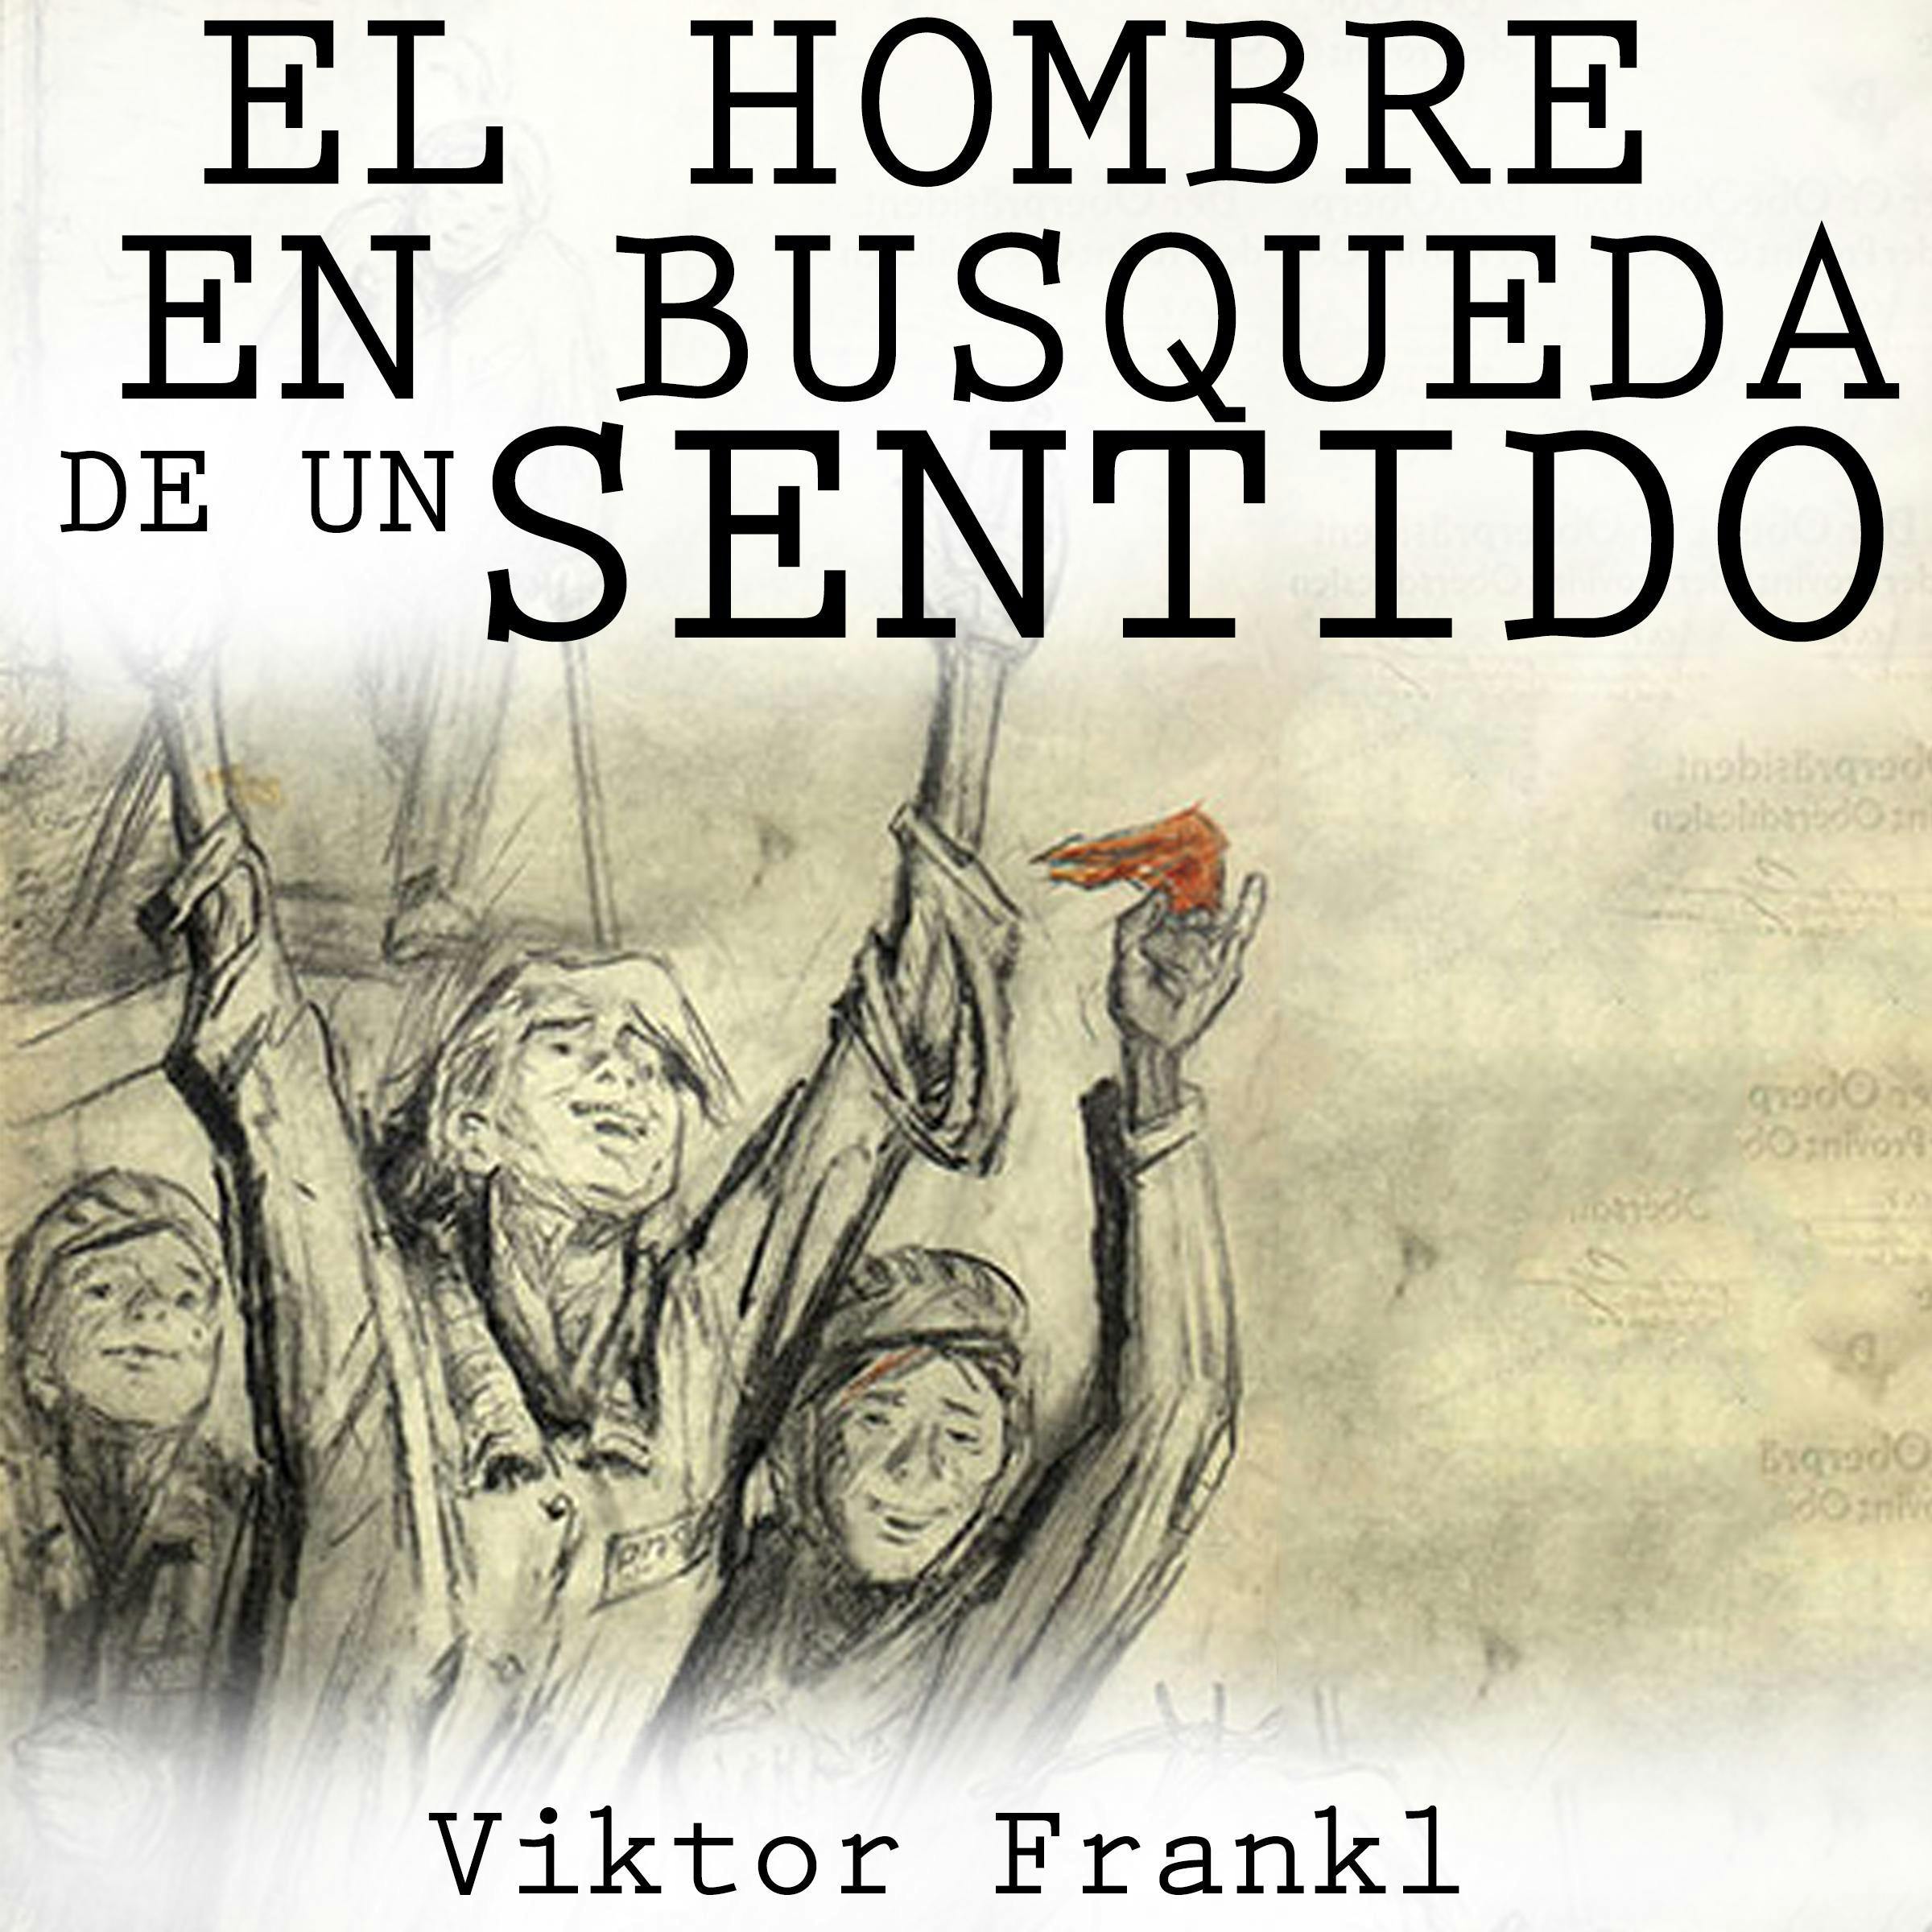 EL HOMBRE EN BUSCA DE SENTIDO ~ Viktor E. Frankl (Spanish New Softcover)  NUEVO